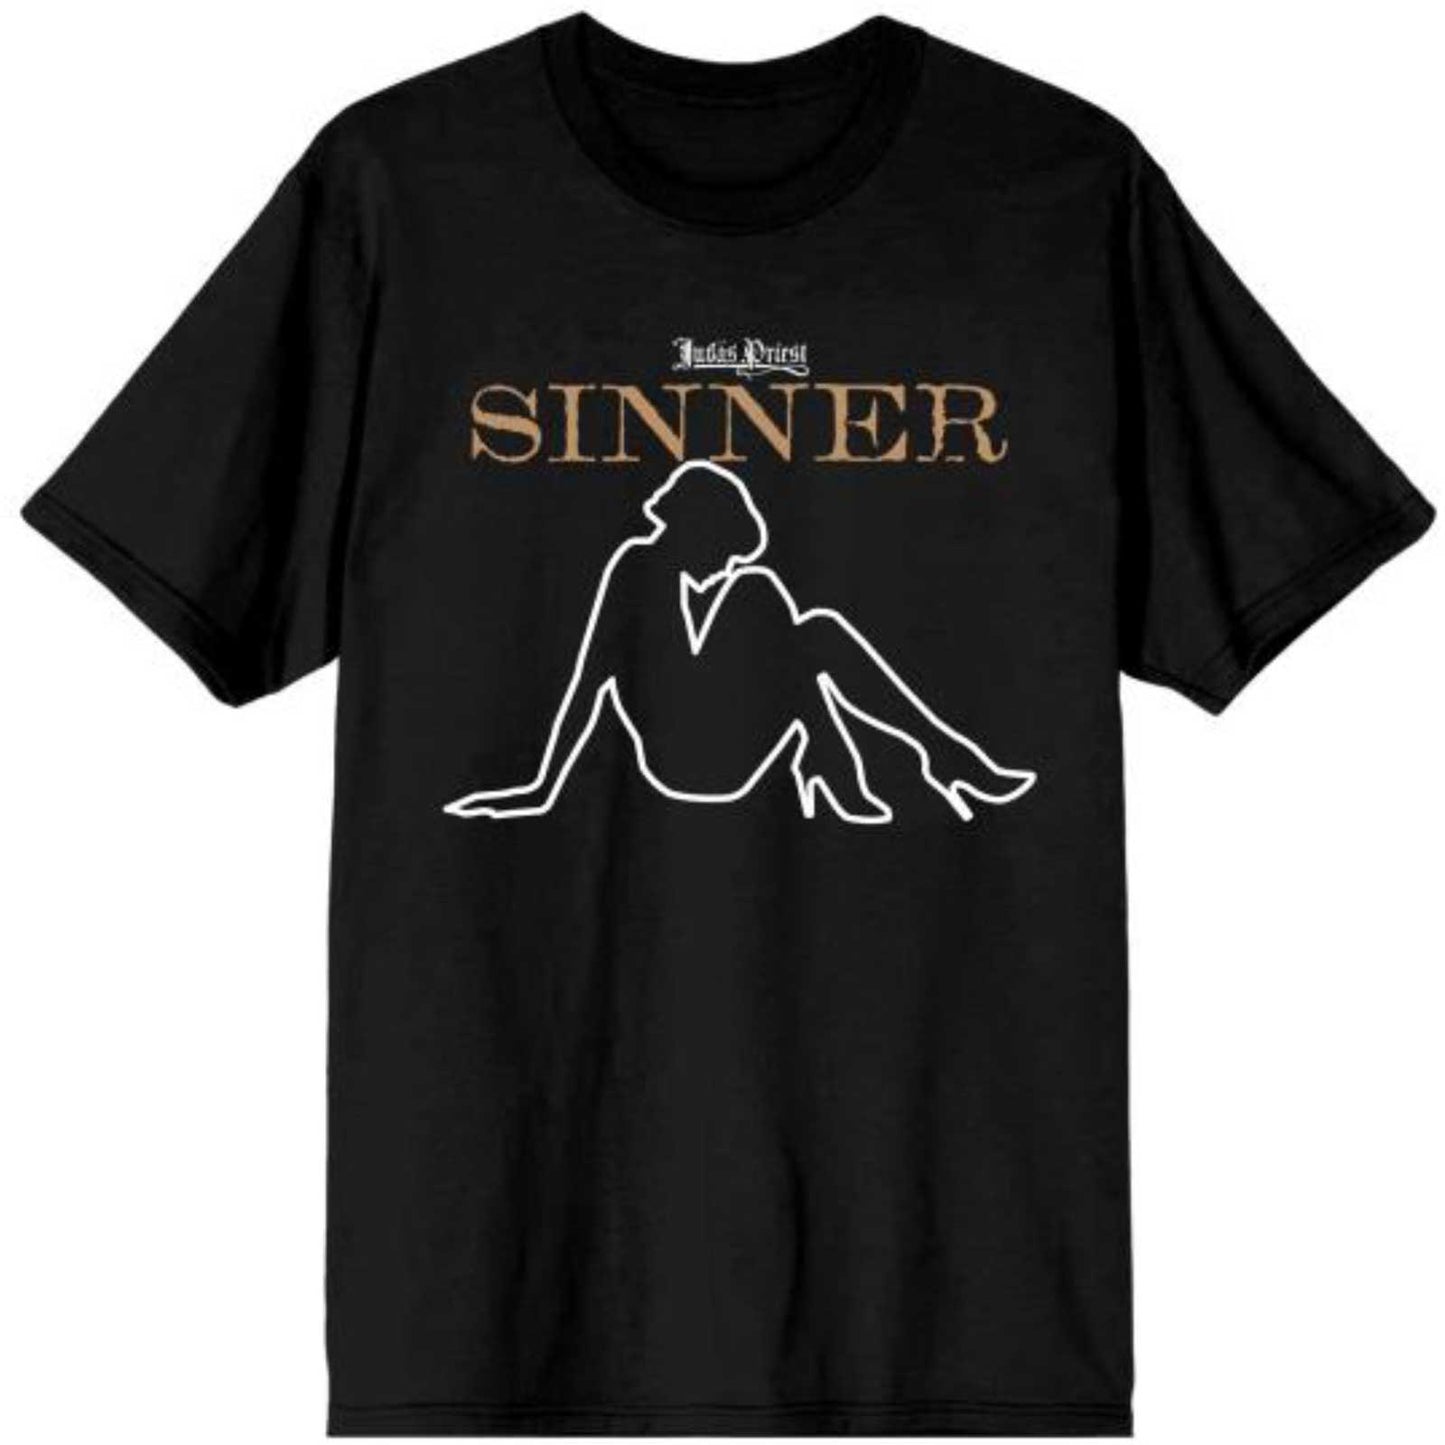 Judas Priest Sin After Sin Sinner Slogan Lady T-Shirt